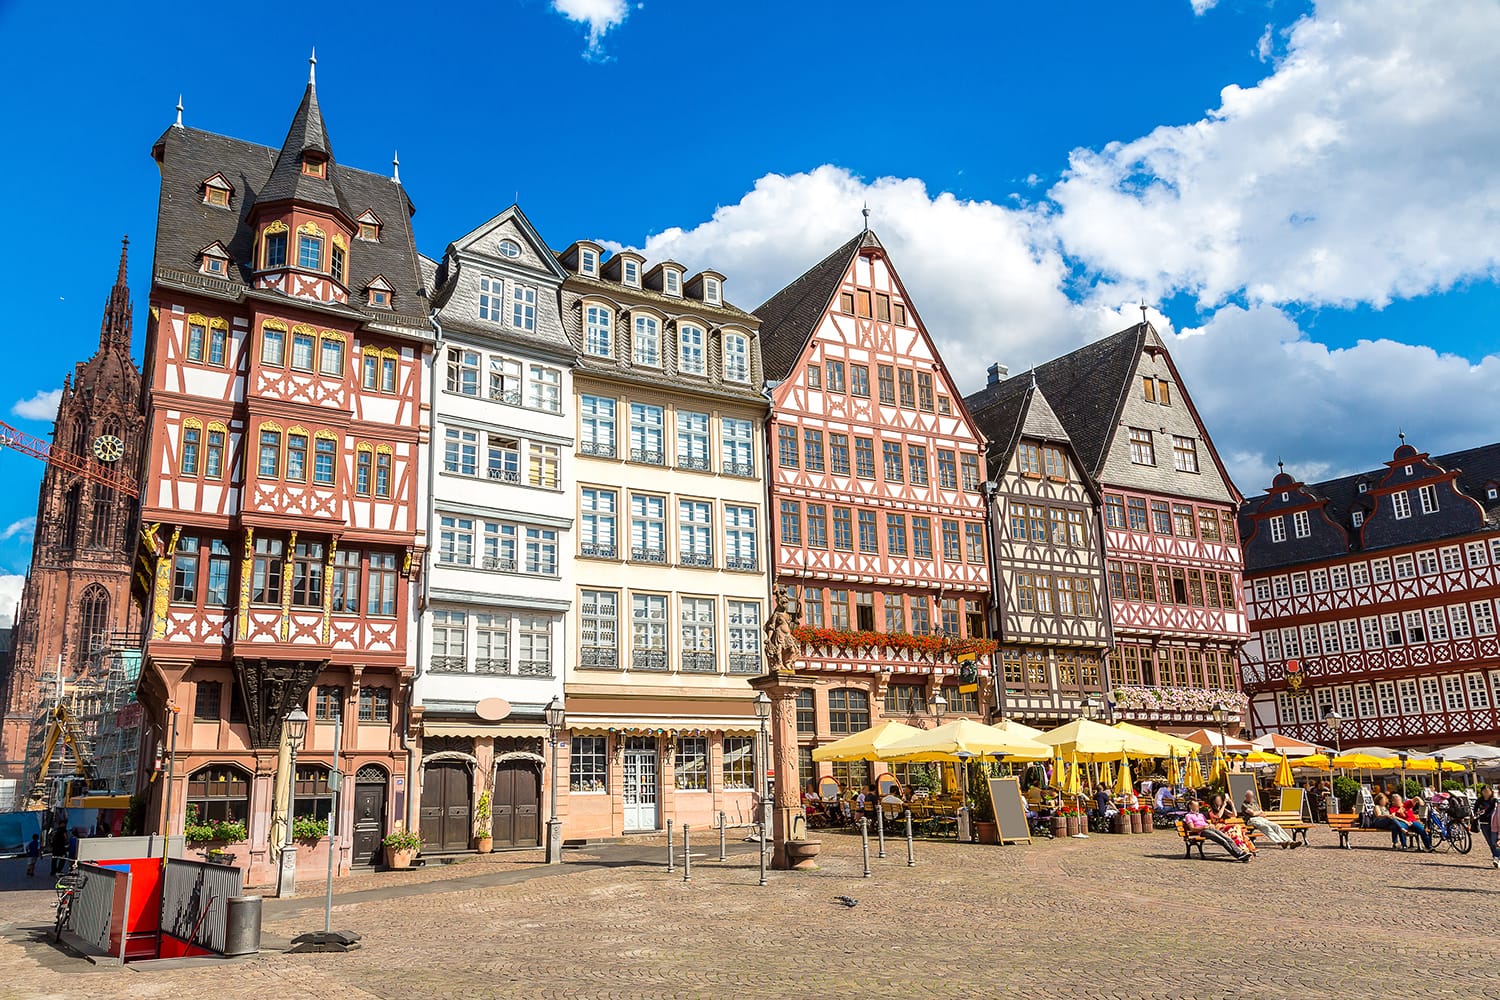 Old town in Frankfurt, Germany